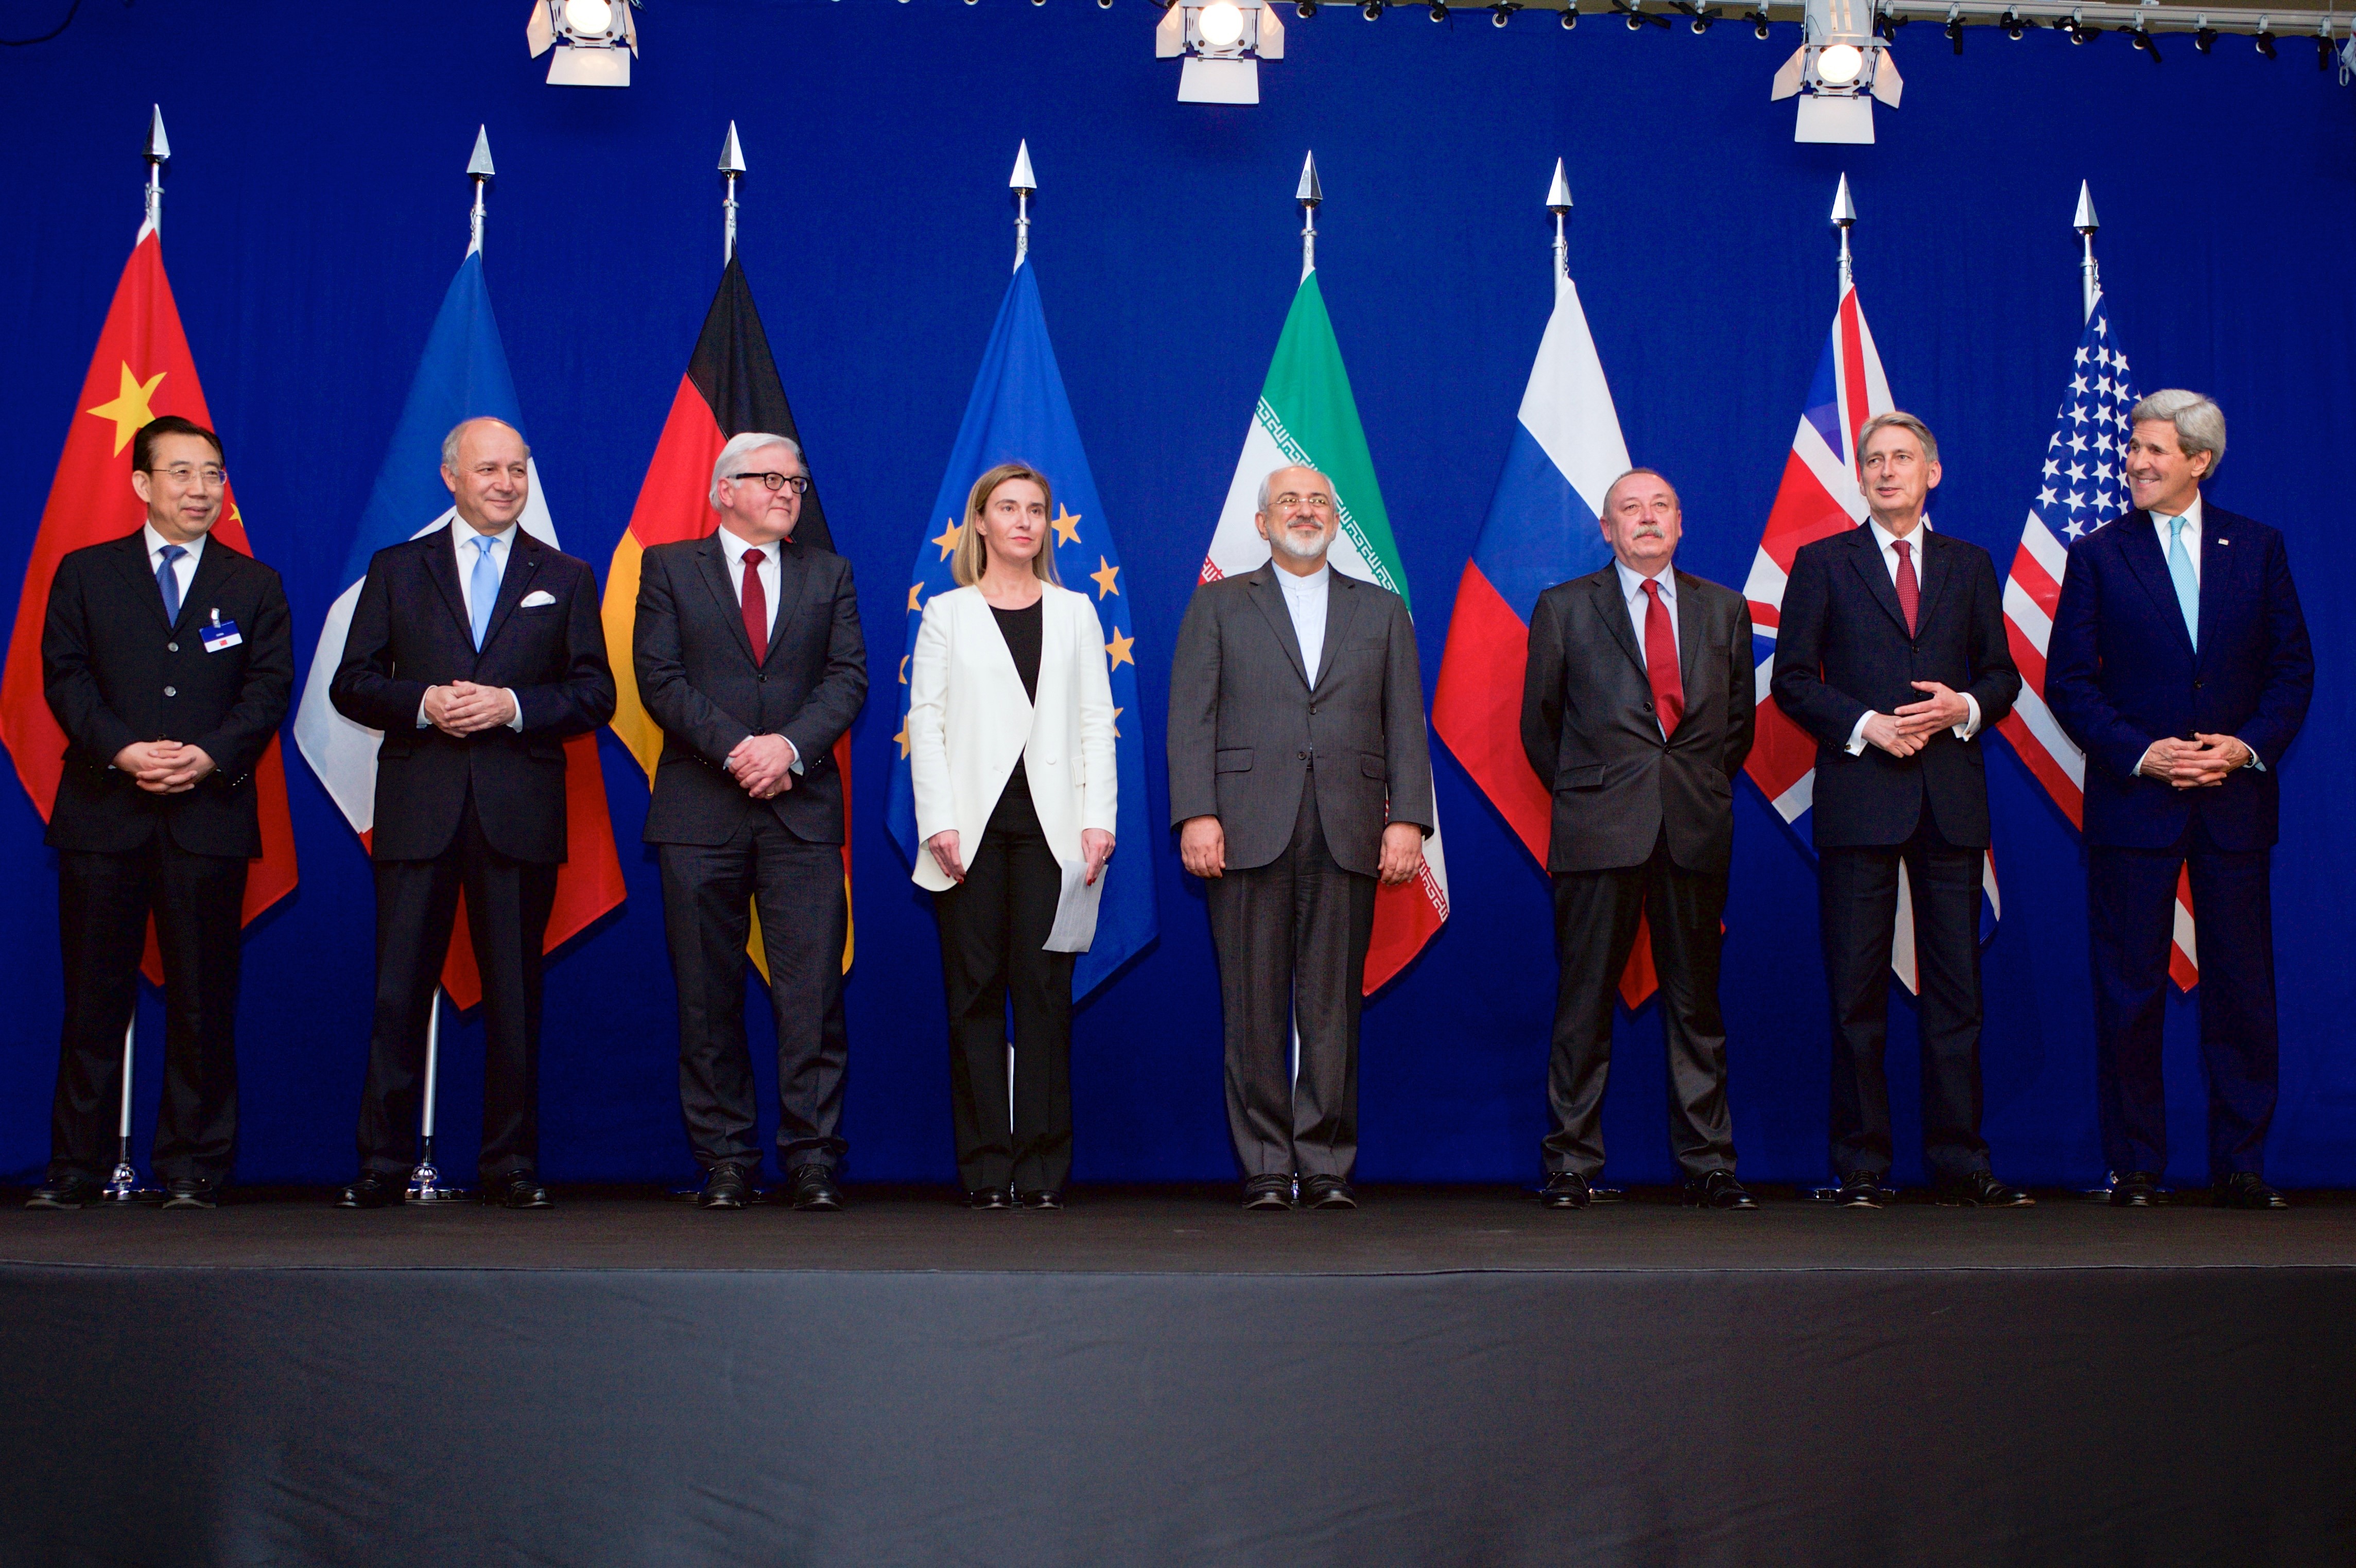 The JCPOA participant states